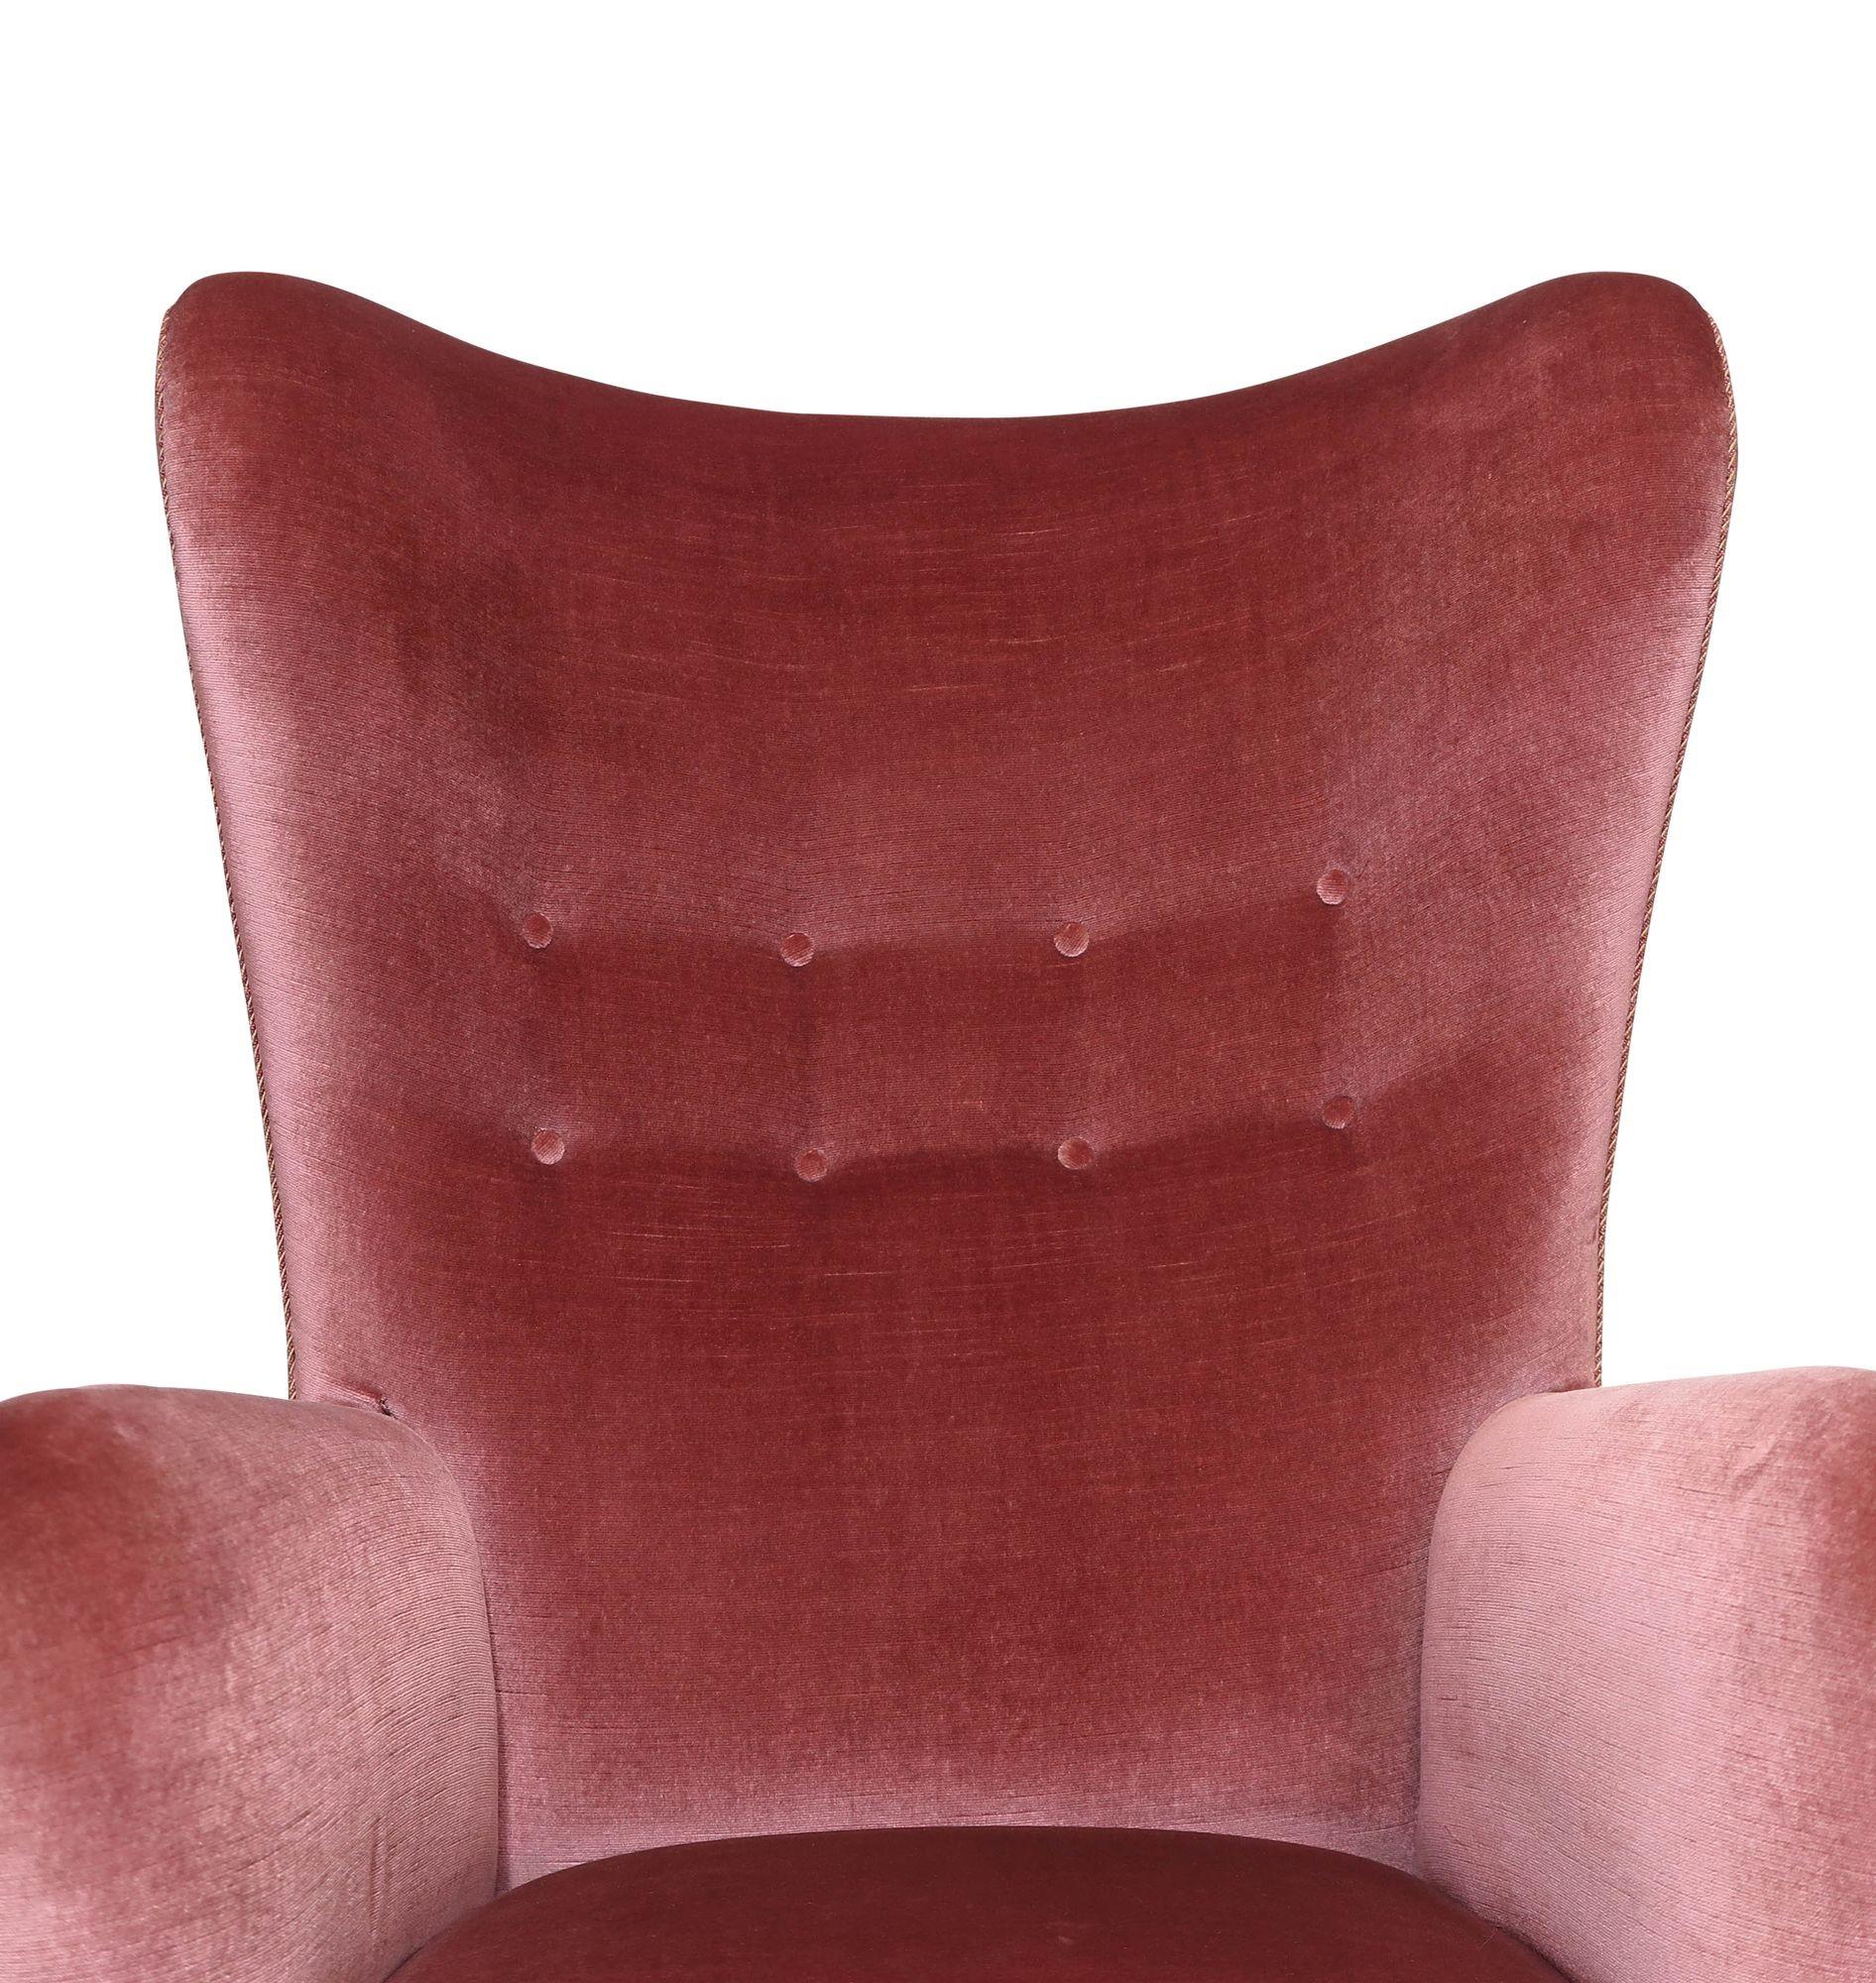 Danish 1942 Fritz Hansen High-back Lounge Chair #1672 in Original Mohair For Sale